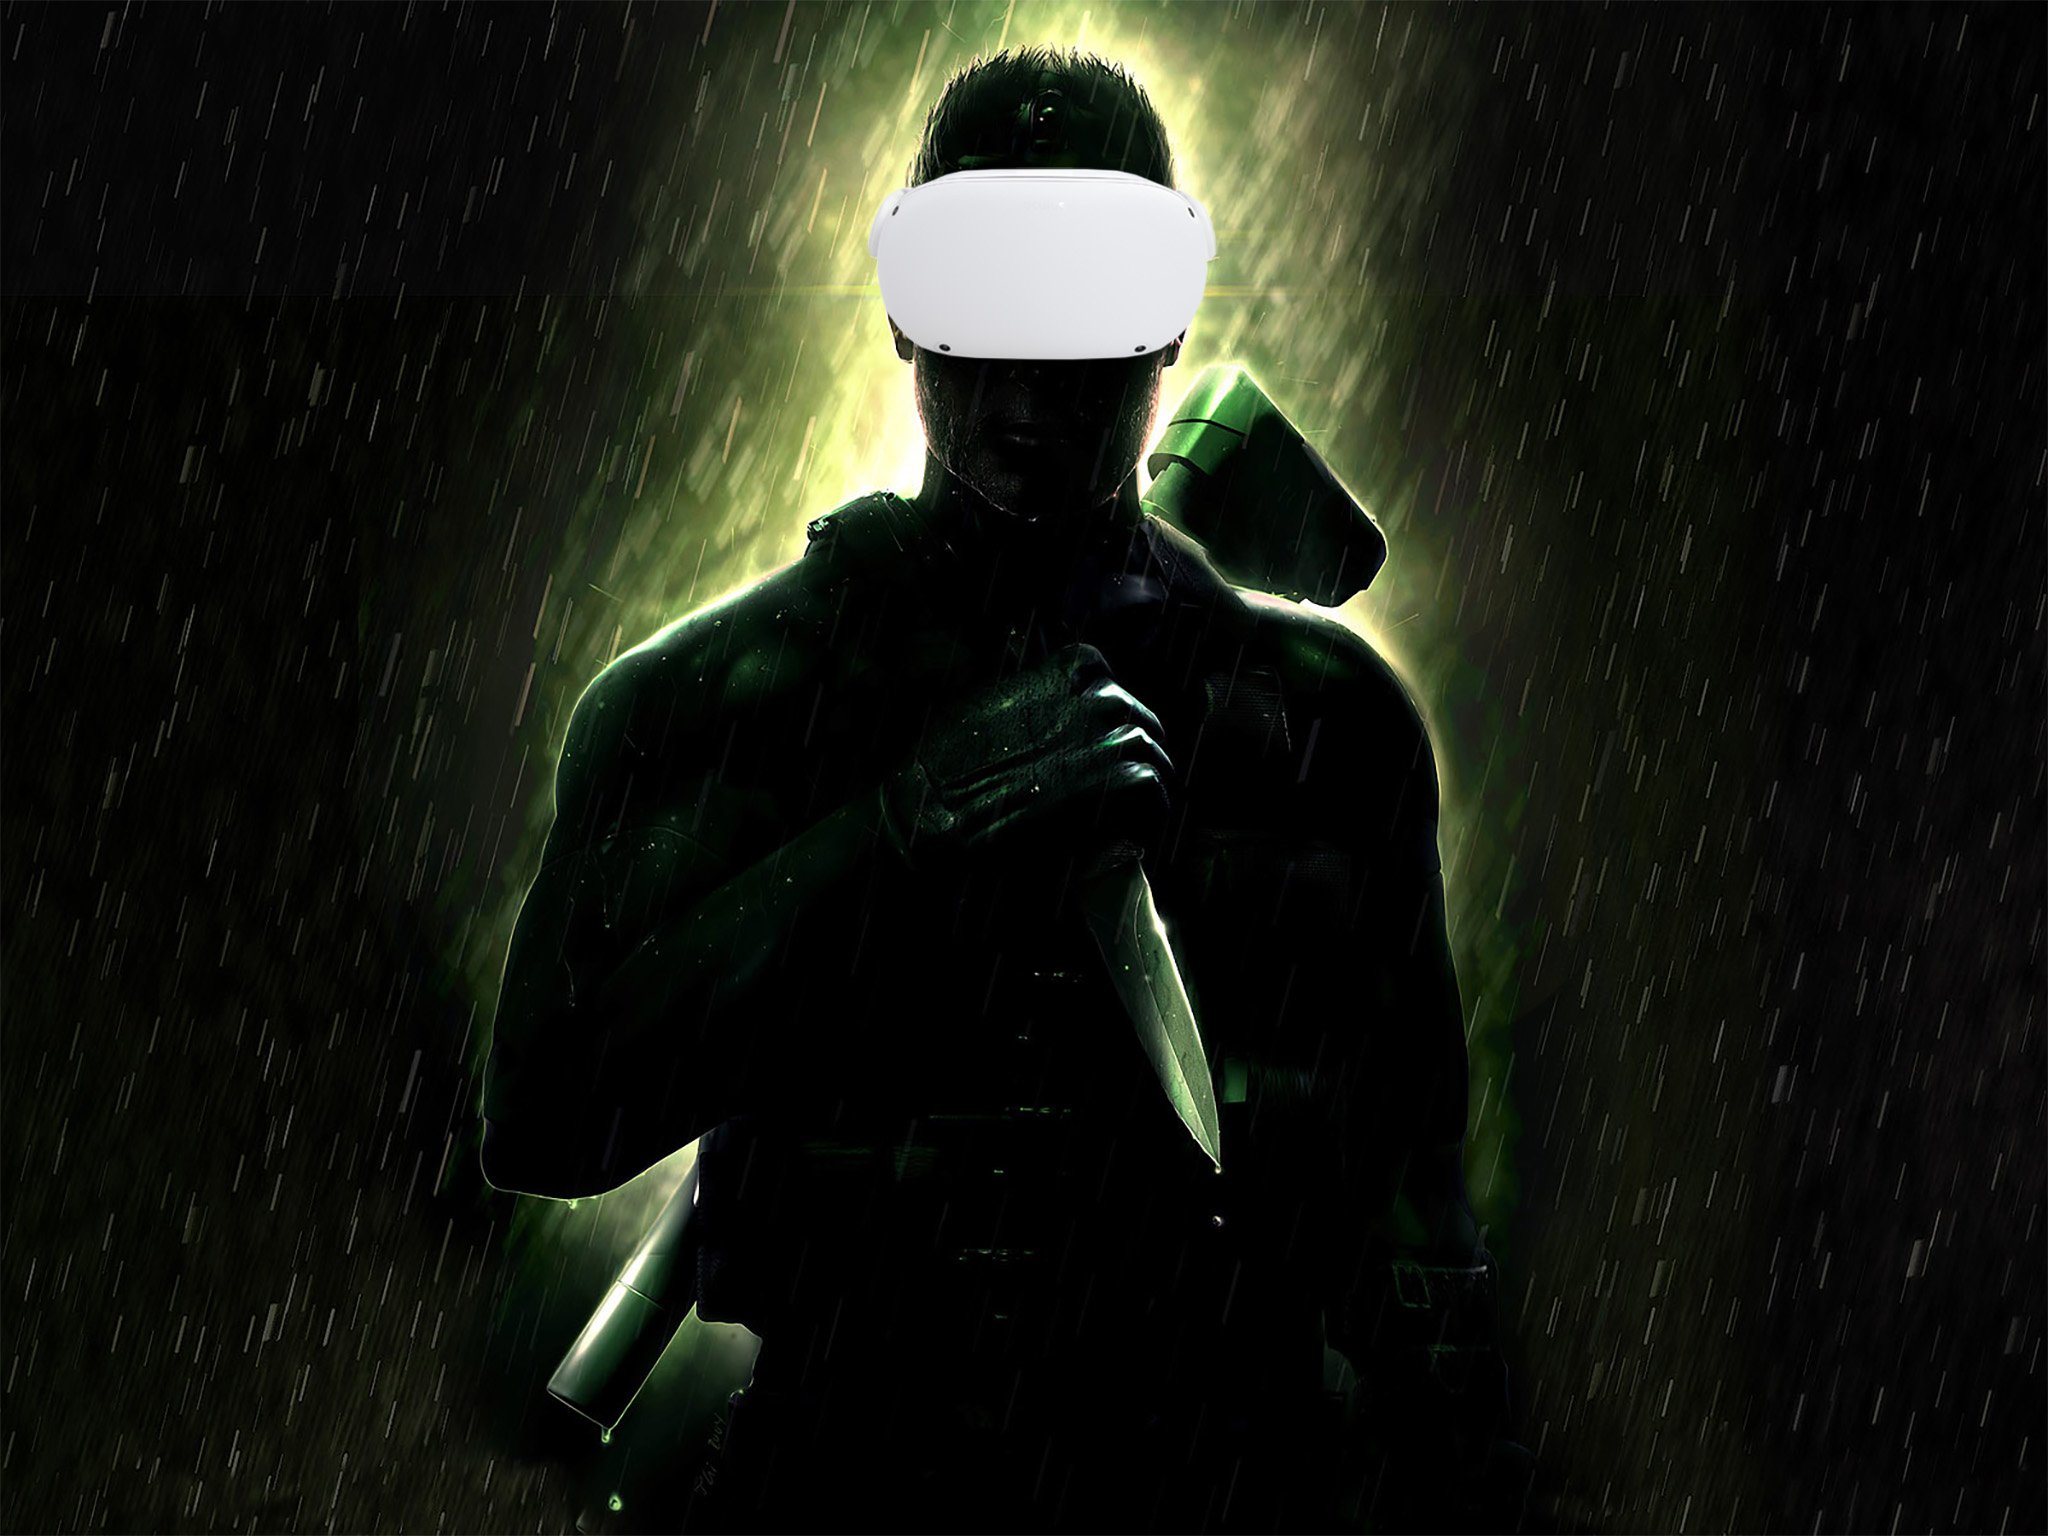 New Splinter Cell VR Game Announced